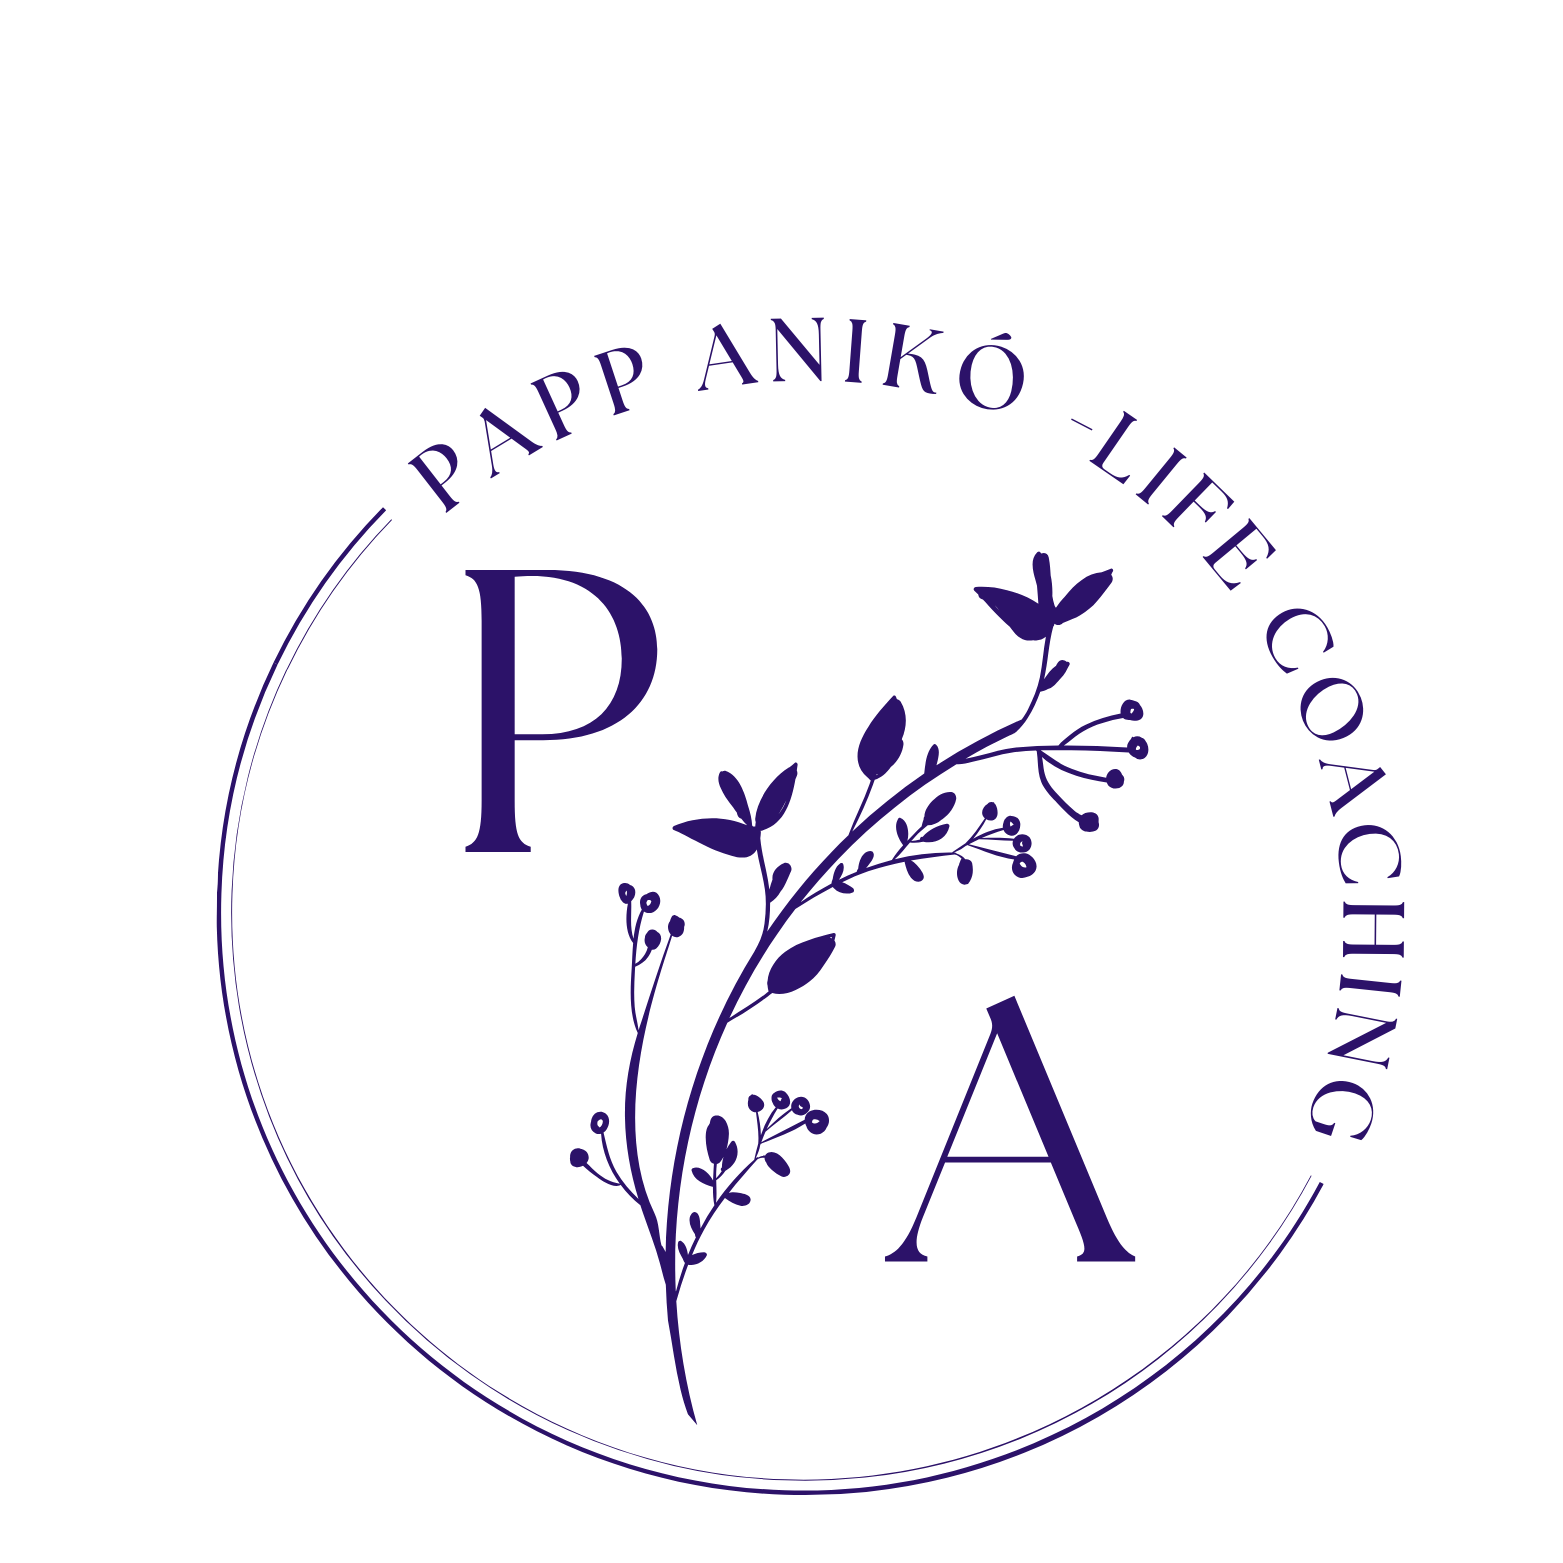 Papp Anikó life coach